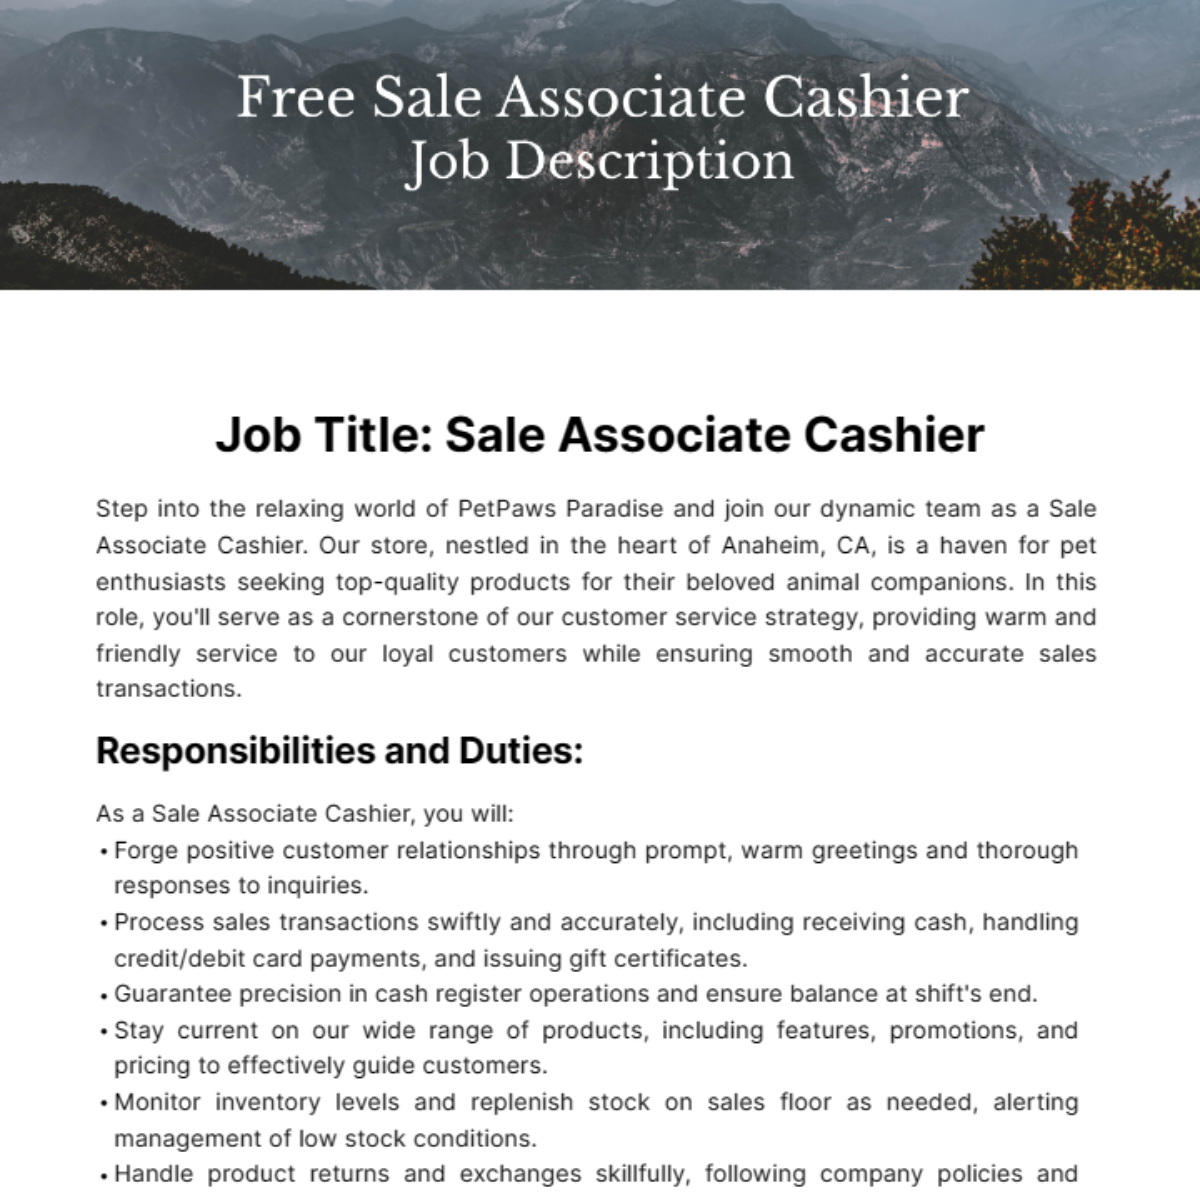 Free Sale Associate Cashier Job Description Template